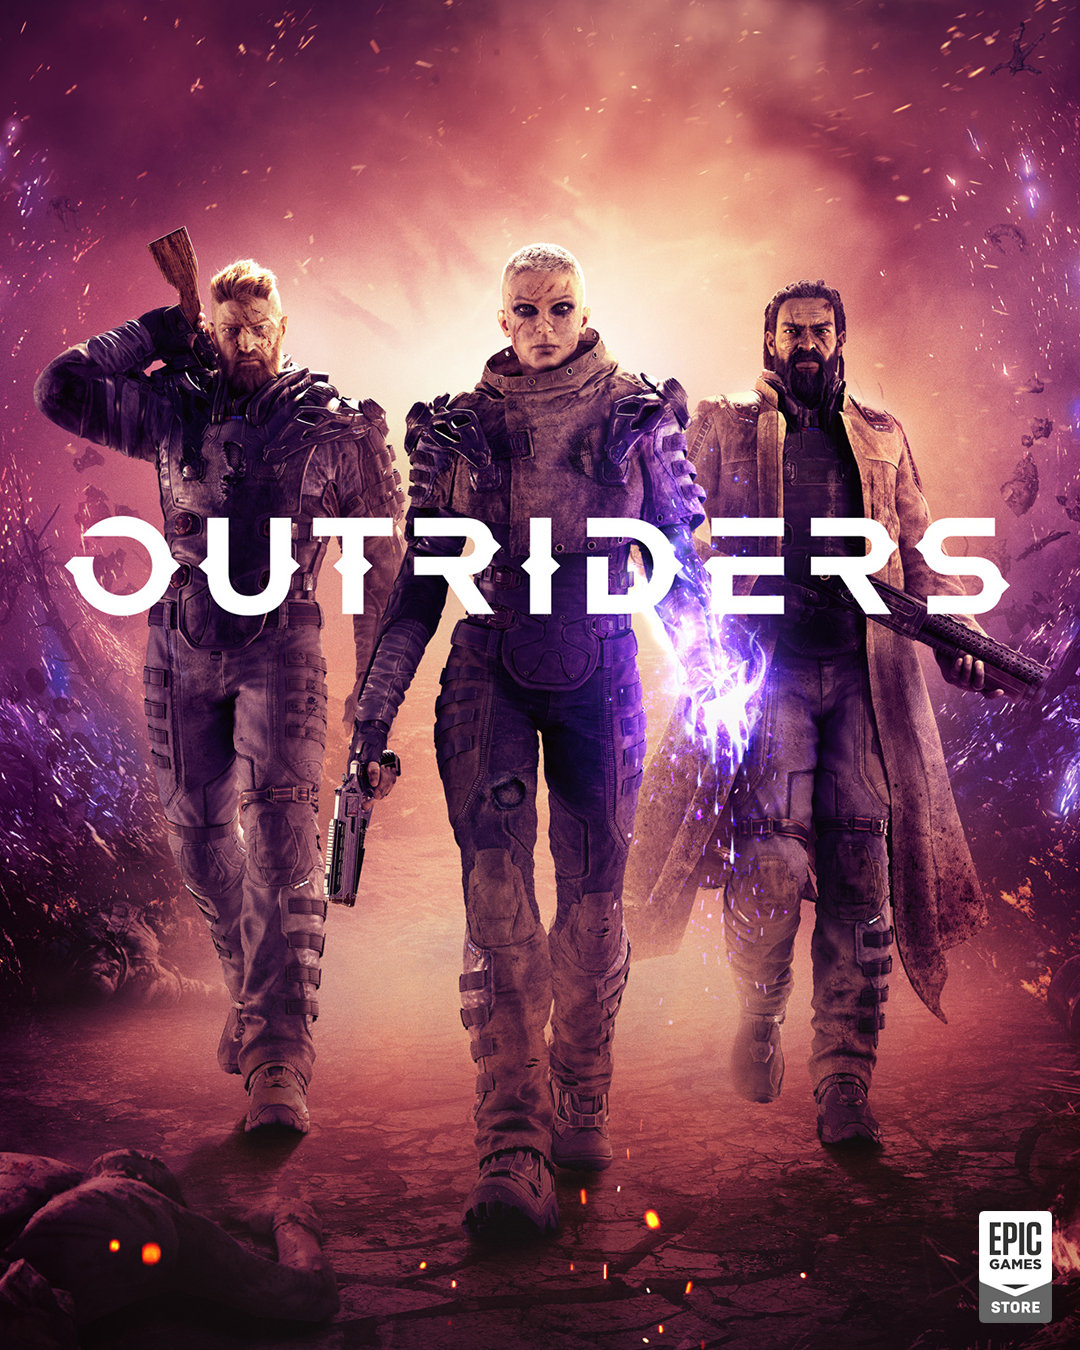 SE暴力射击游戏《Outriders》再次延期至愚人节上市